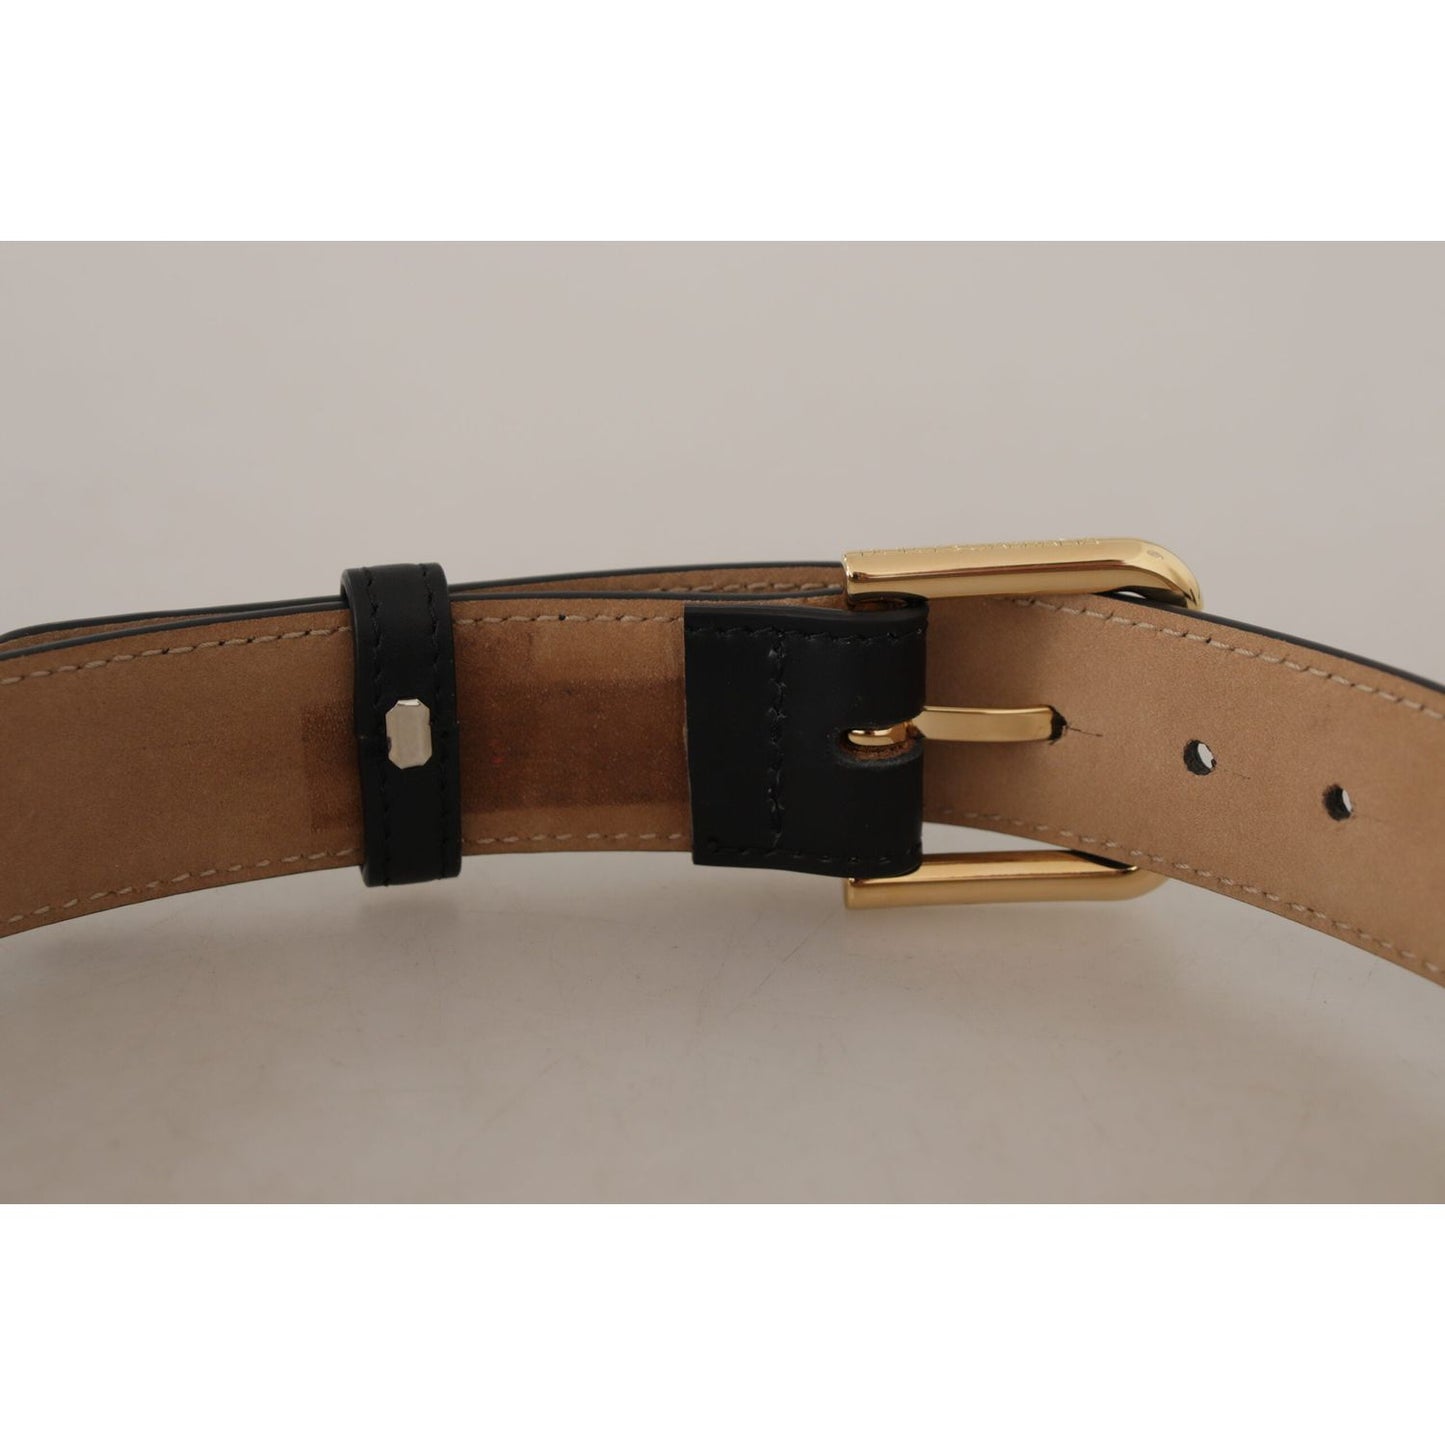 Dolce & Gabbana Elegant Leather Belt with Logo Buckle black-solid-leather-classic-gold-waist-buckle-belt